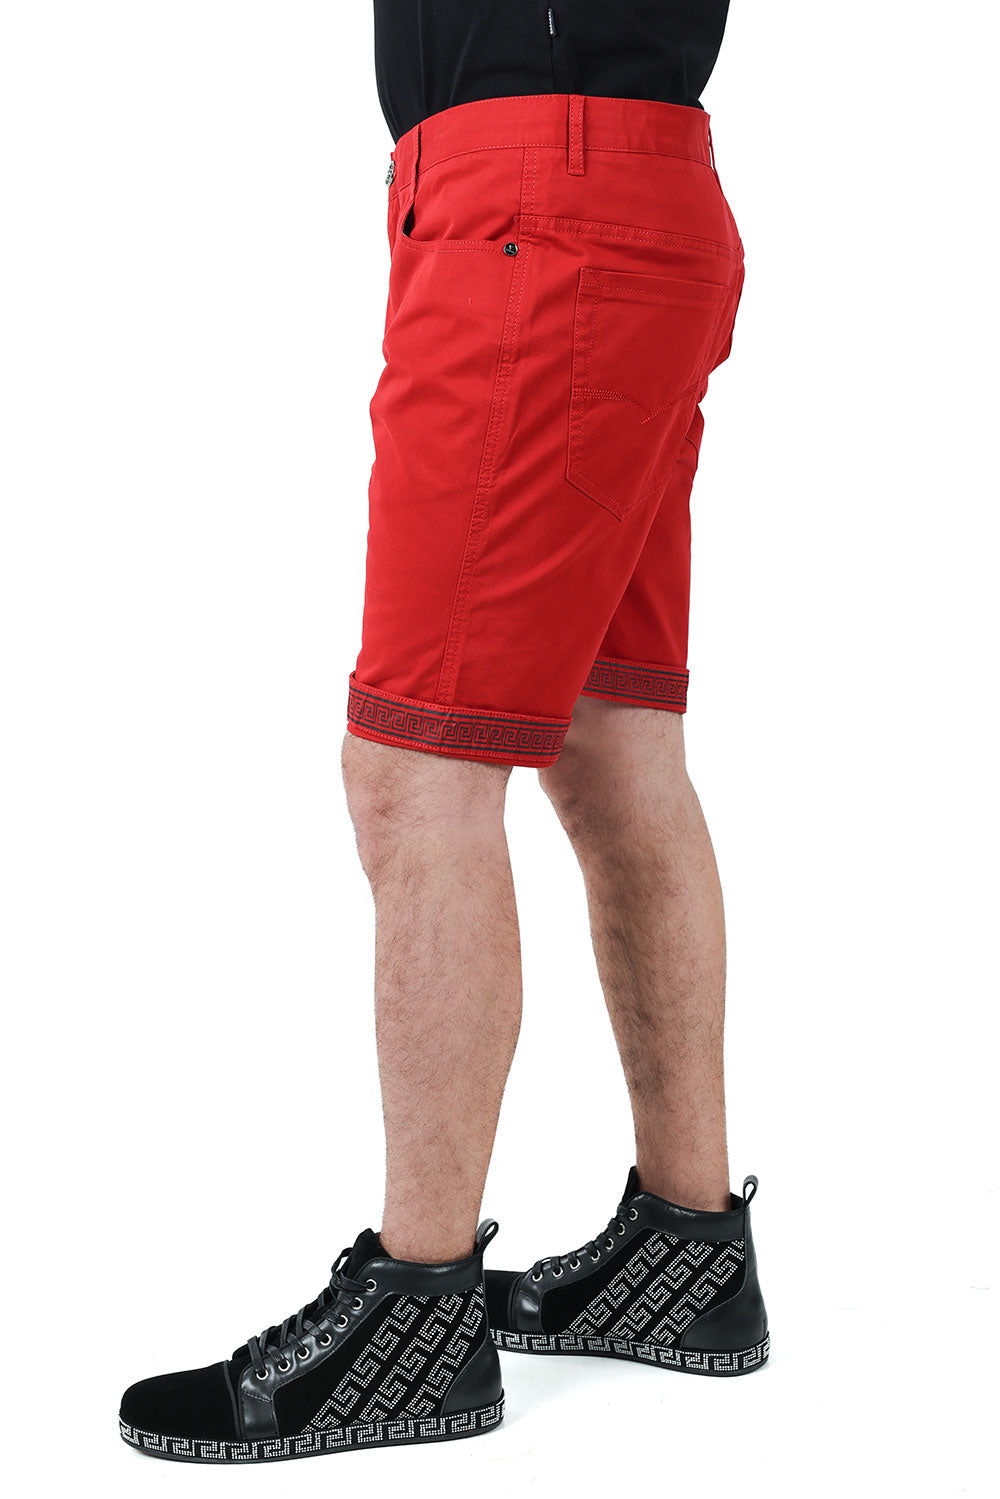 Barabas Men's Greek Key Printed Solid Color Luxury Shorts SVC4001 Red Black